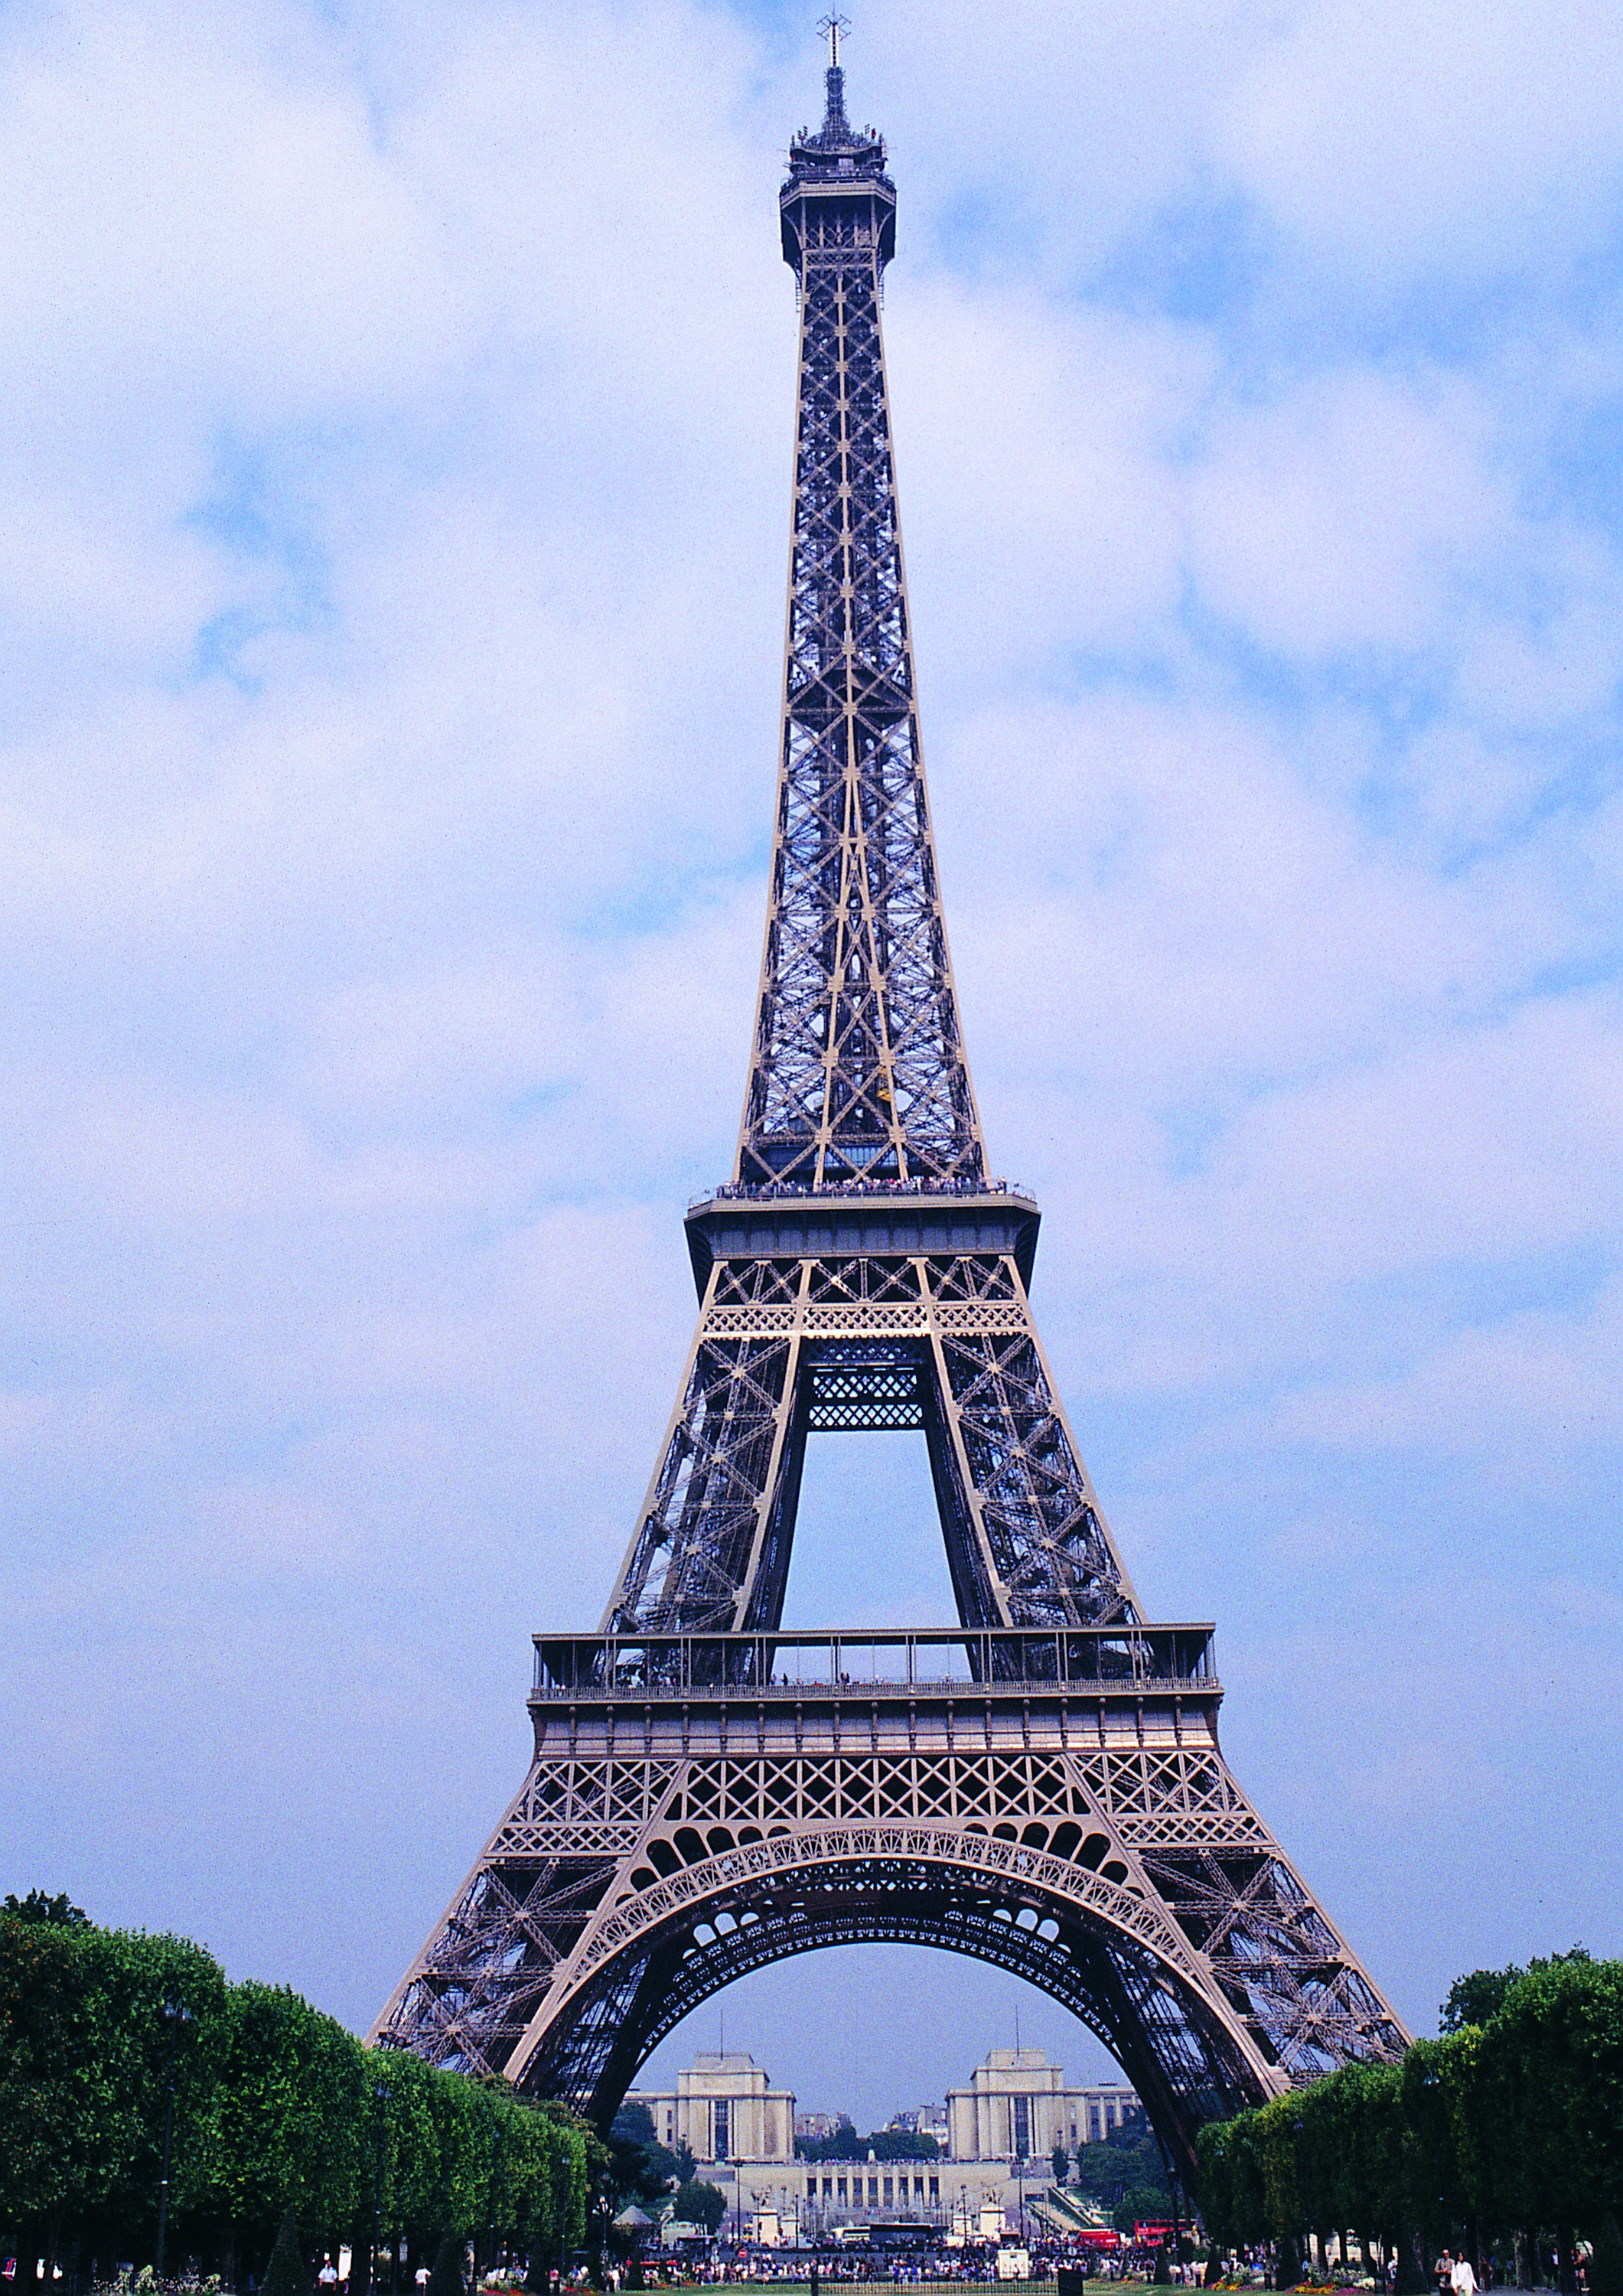 46+] Paris Eiffel Tower HD Wallpaper - WallpaperSafari